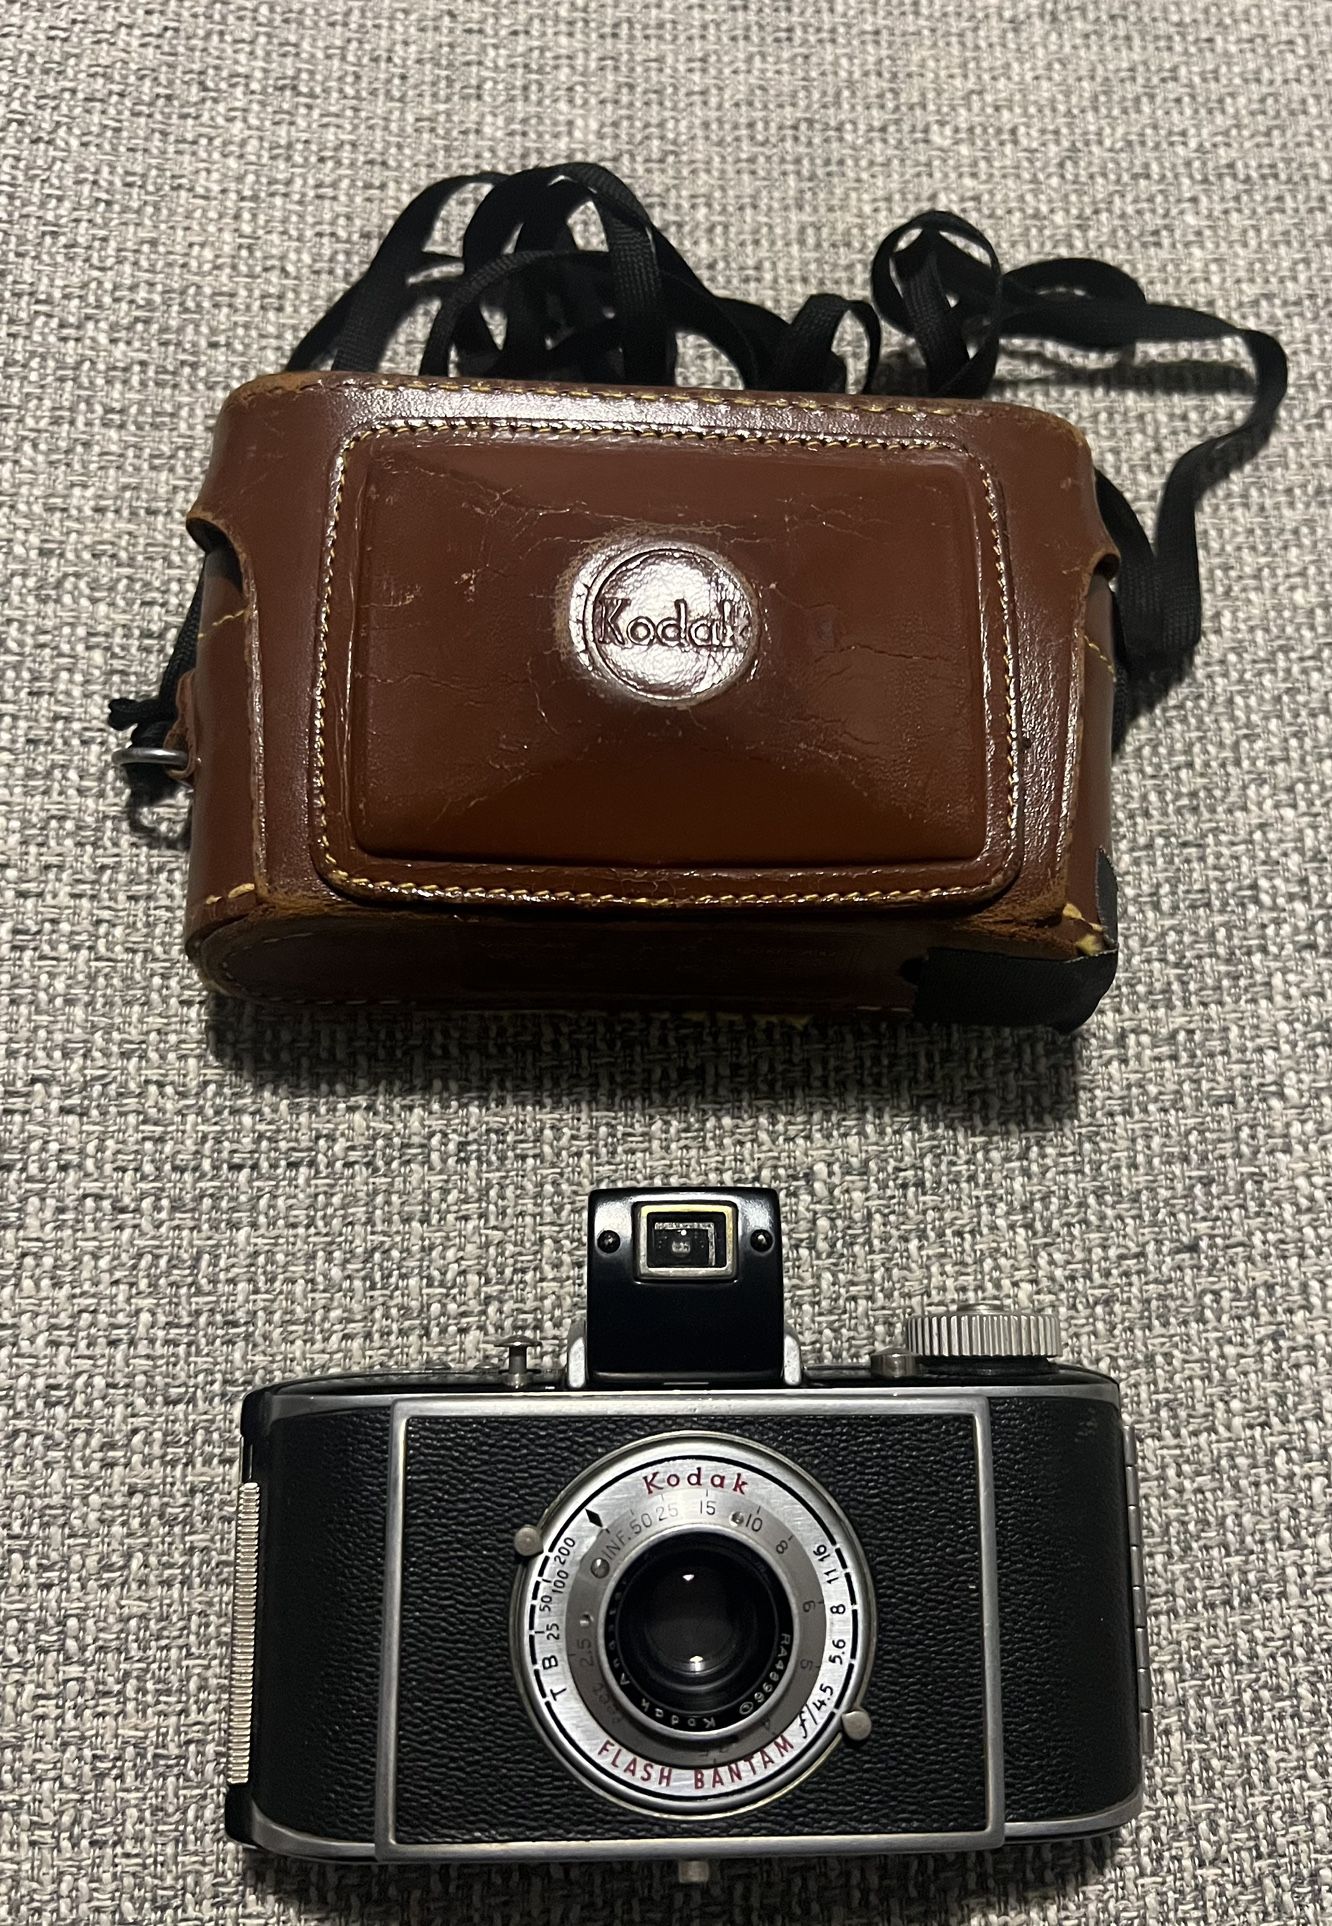 Kodak Flash Bantam Vintage Film Camera